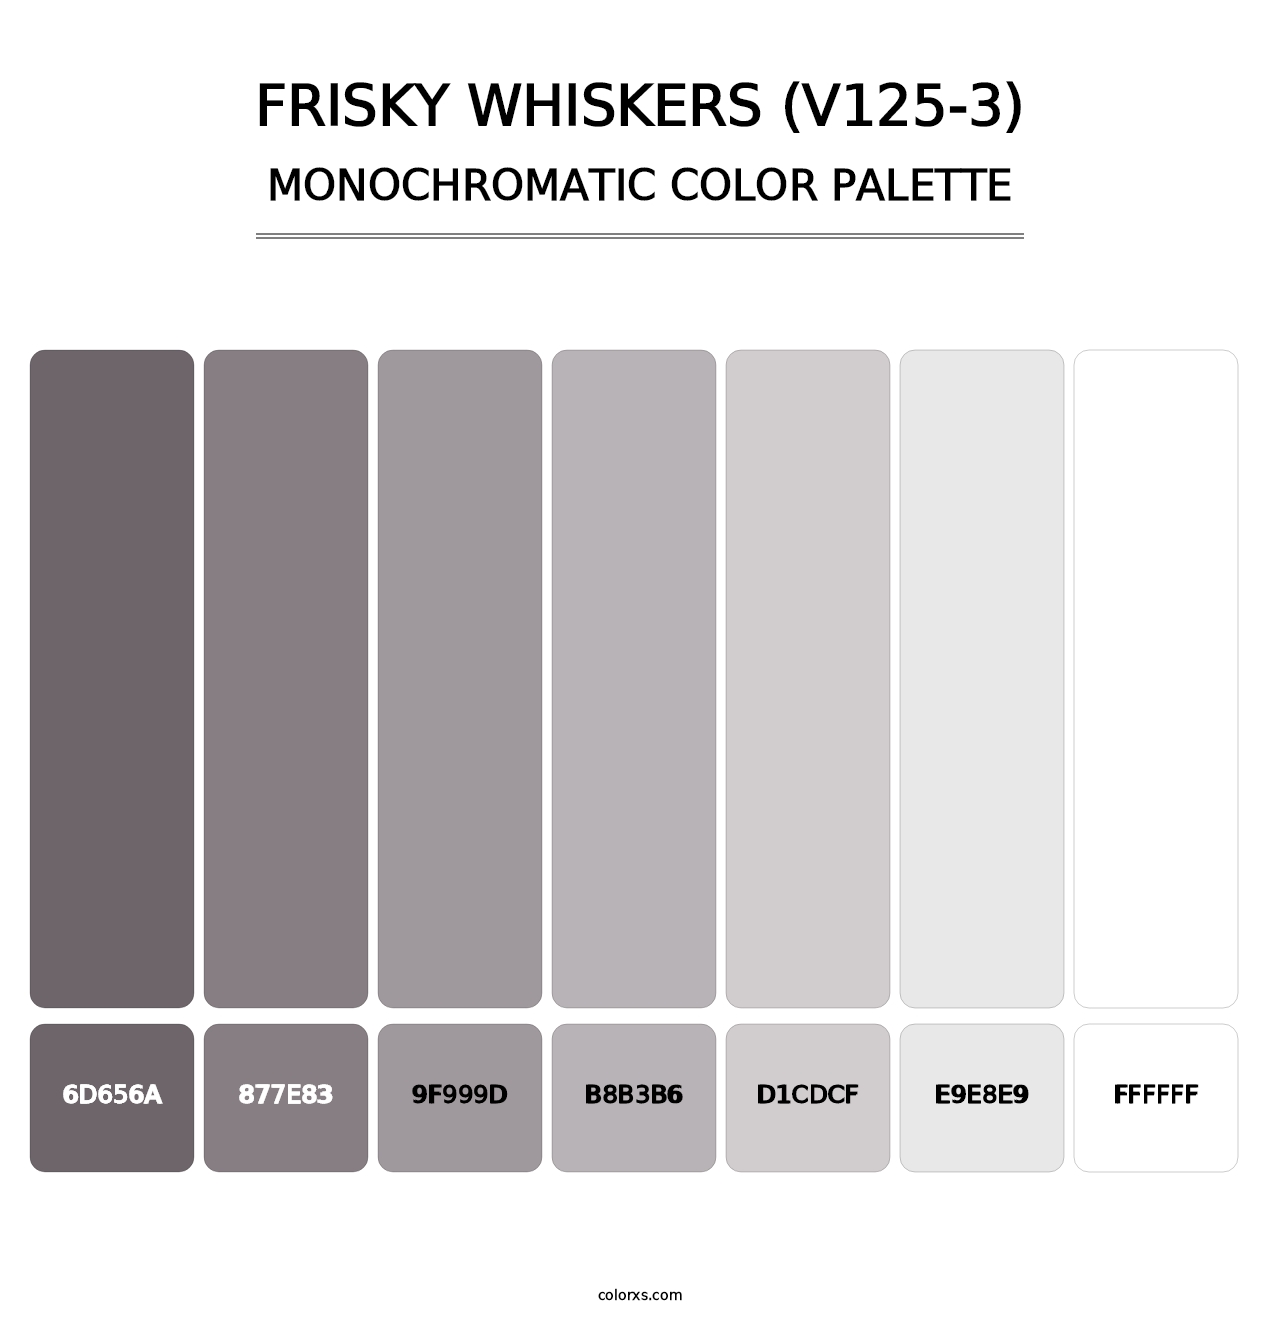 Frisky Whiskers (V125-3) - Monochromatic Color Palette